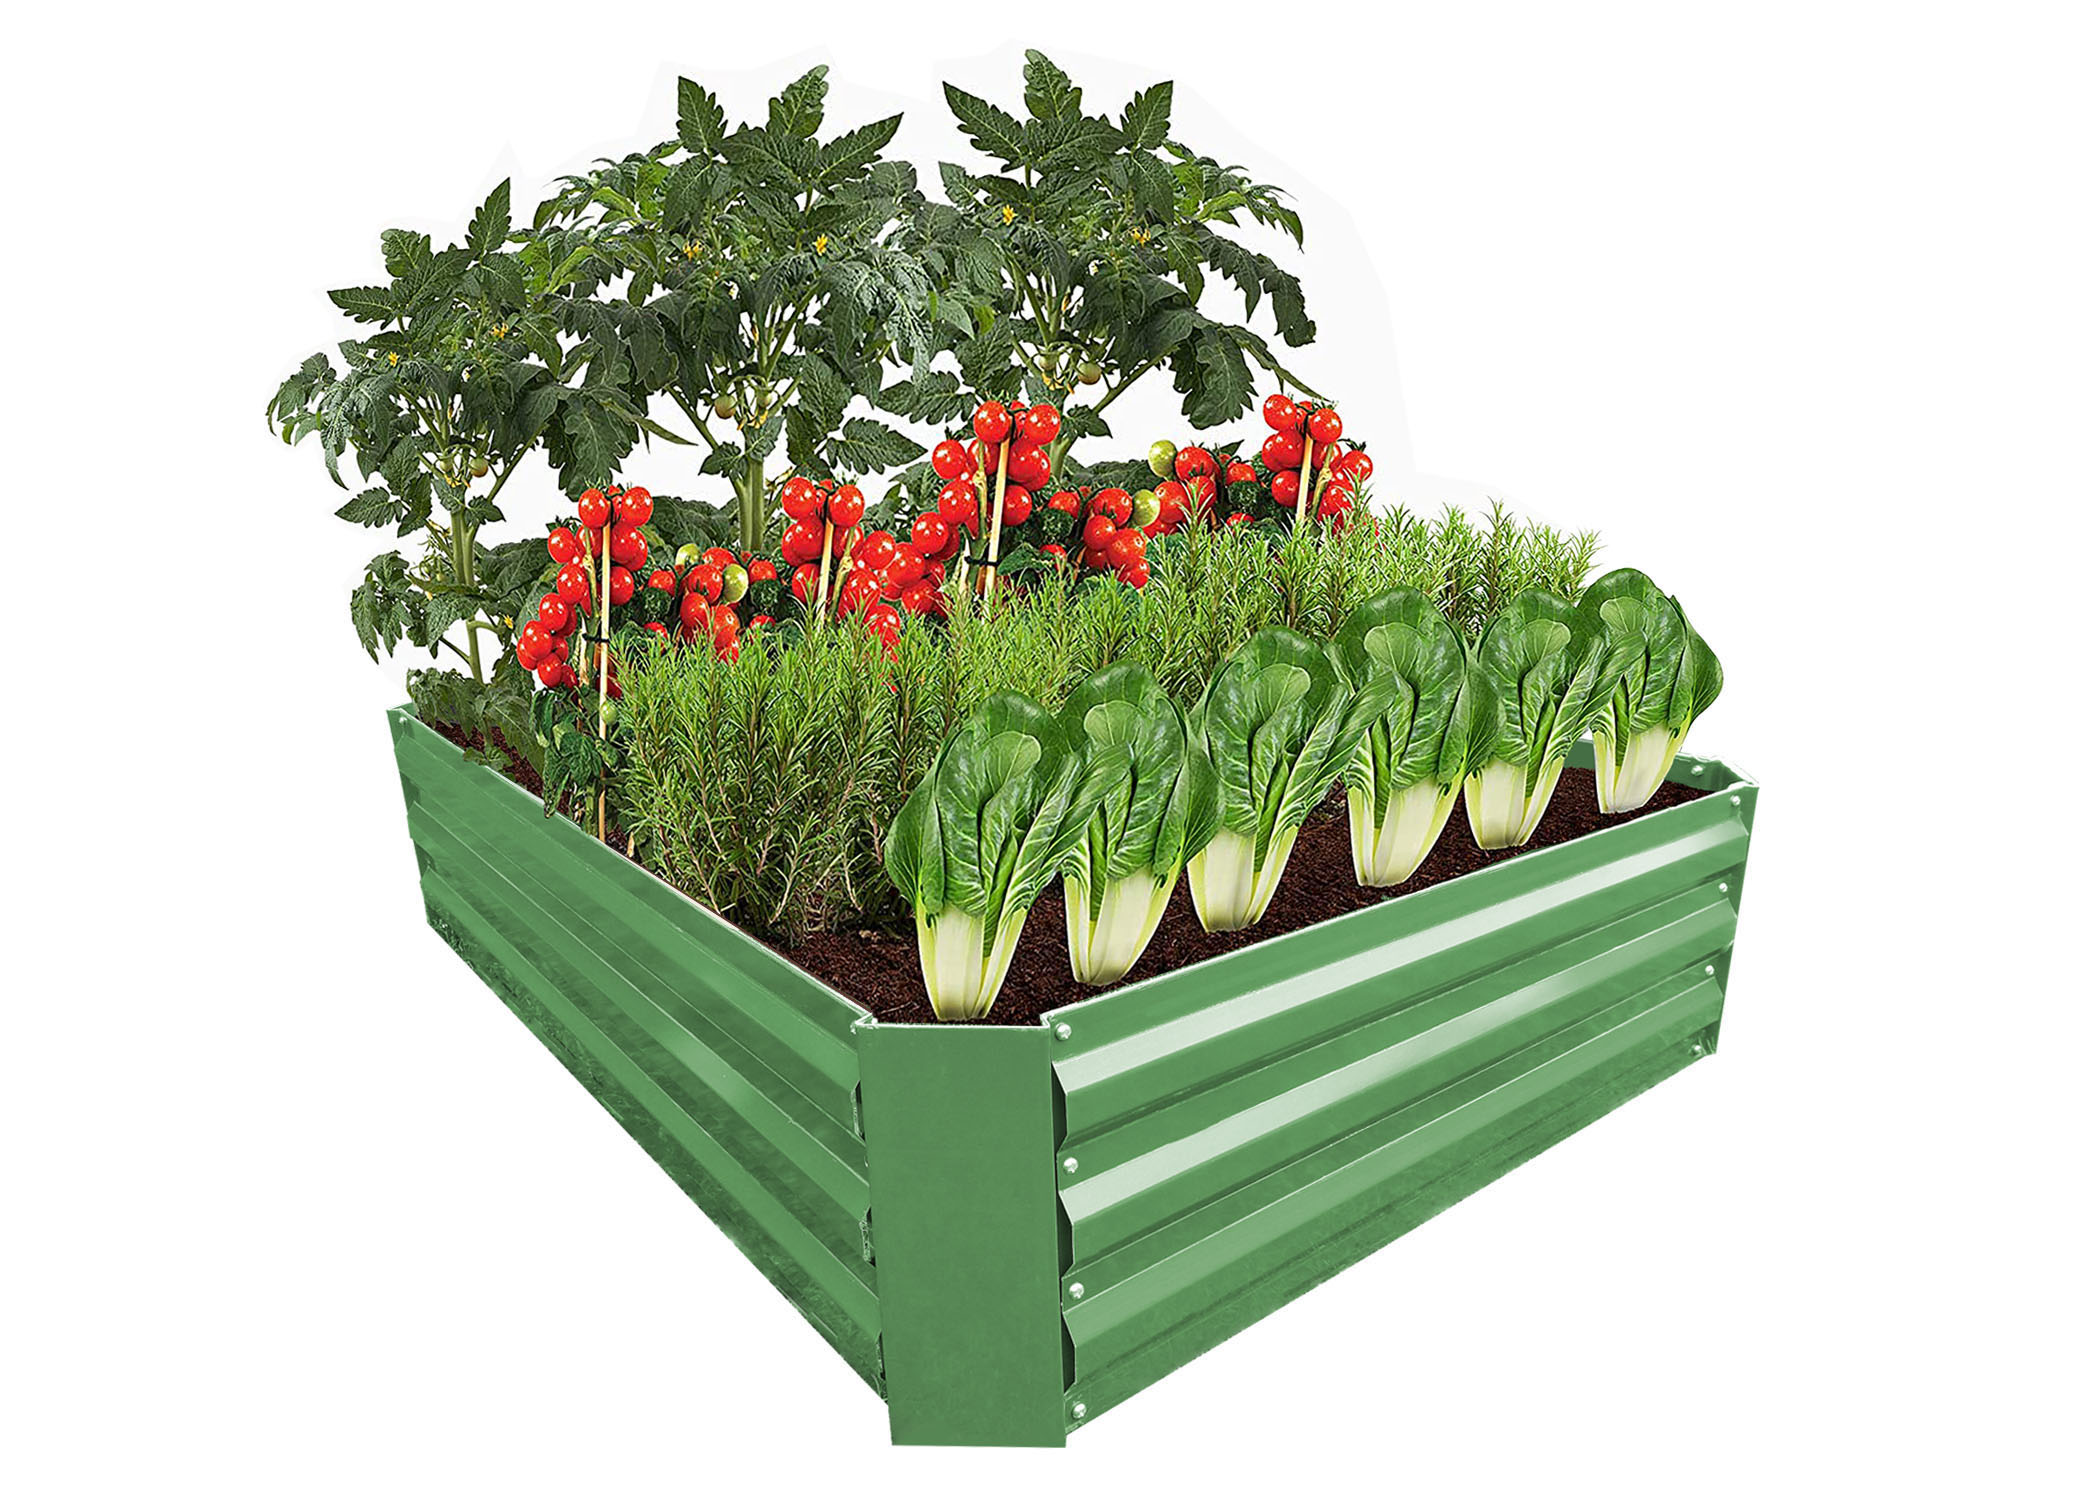 Zenport WS1003 Raised Garden Bed Kit, Green, 39.4 x 39.4 x 11.8-inches